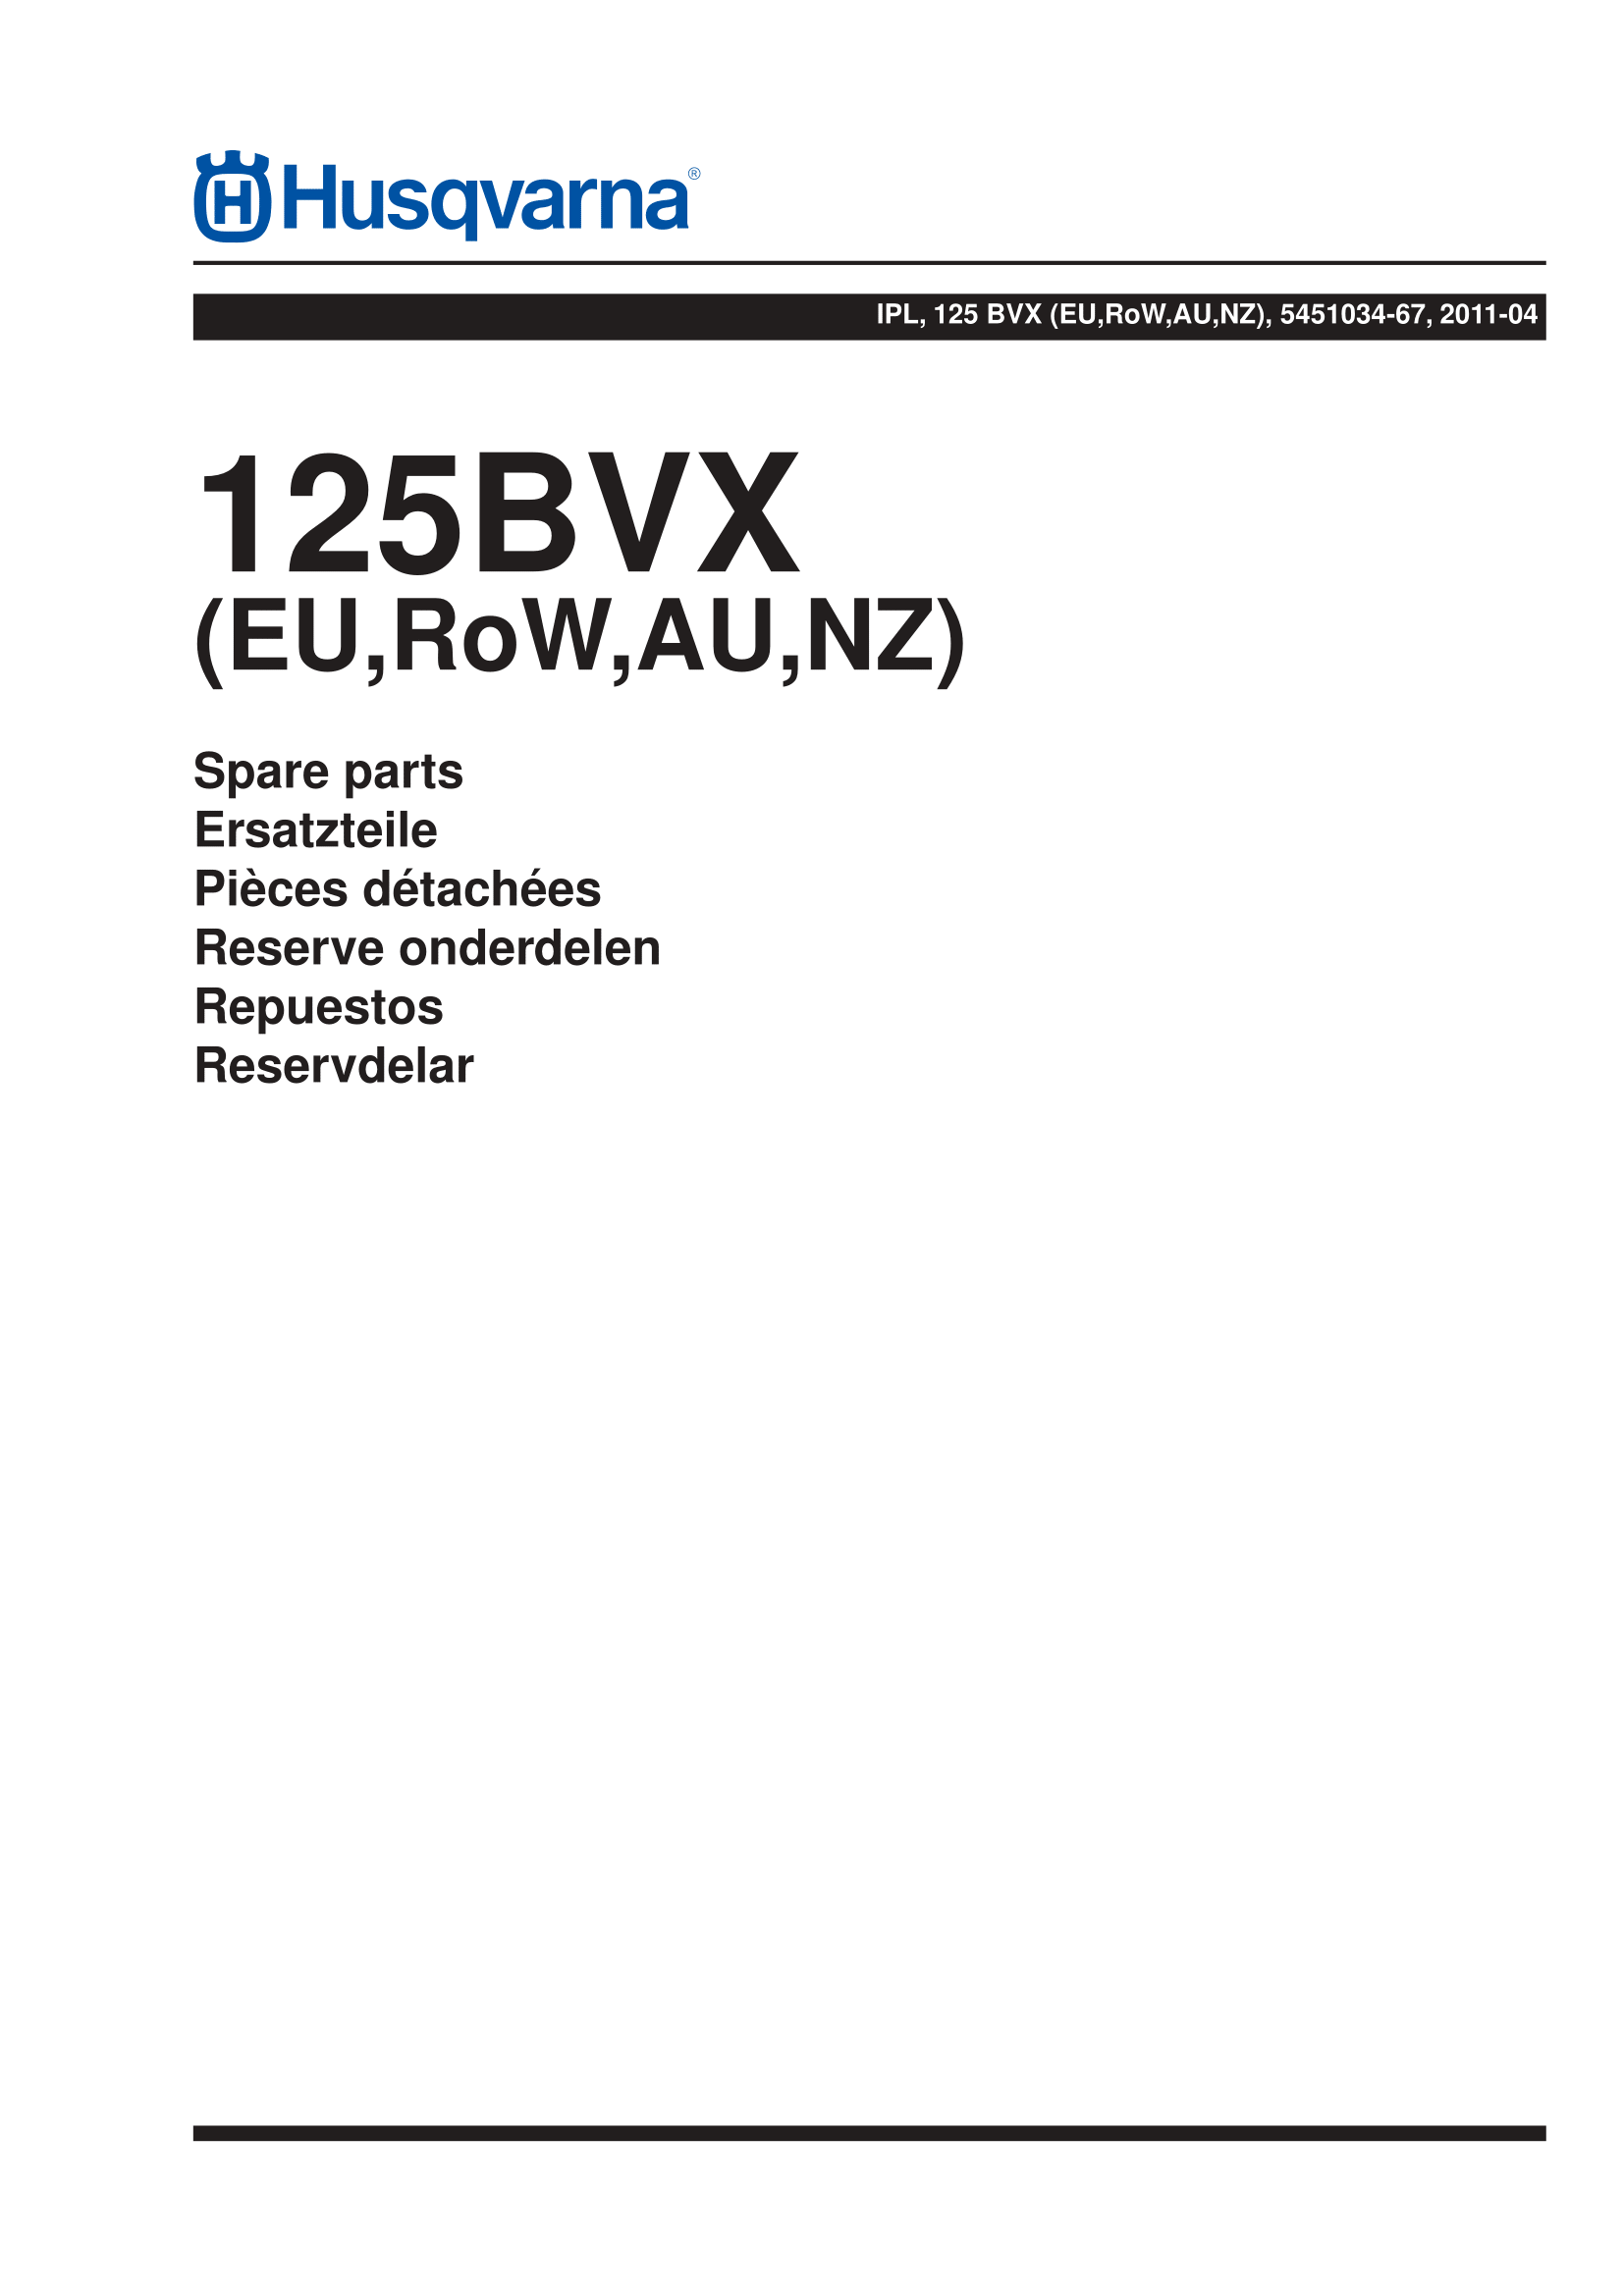 Husqvarna 125BVX (2011-04)